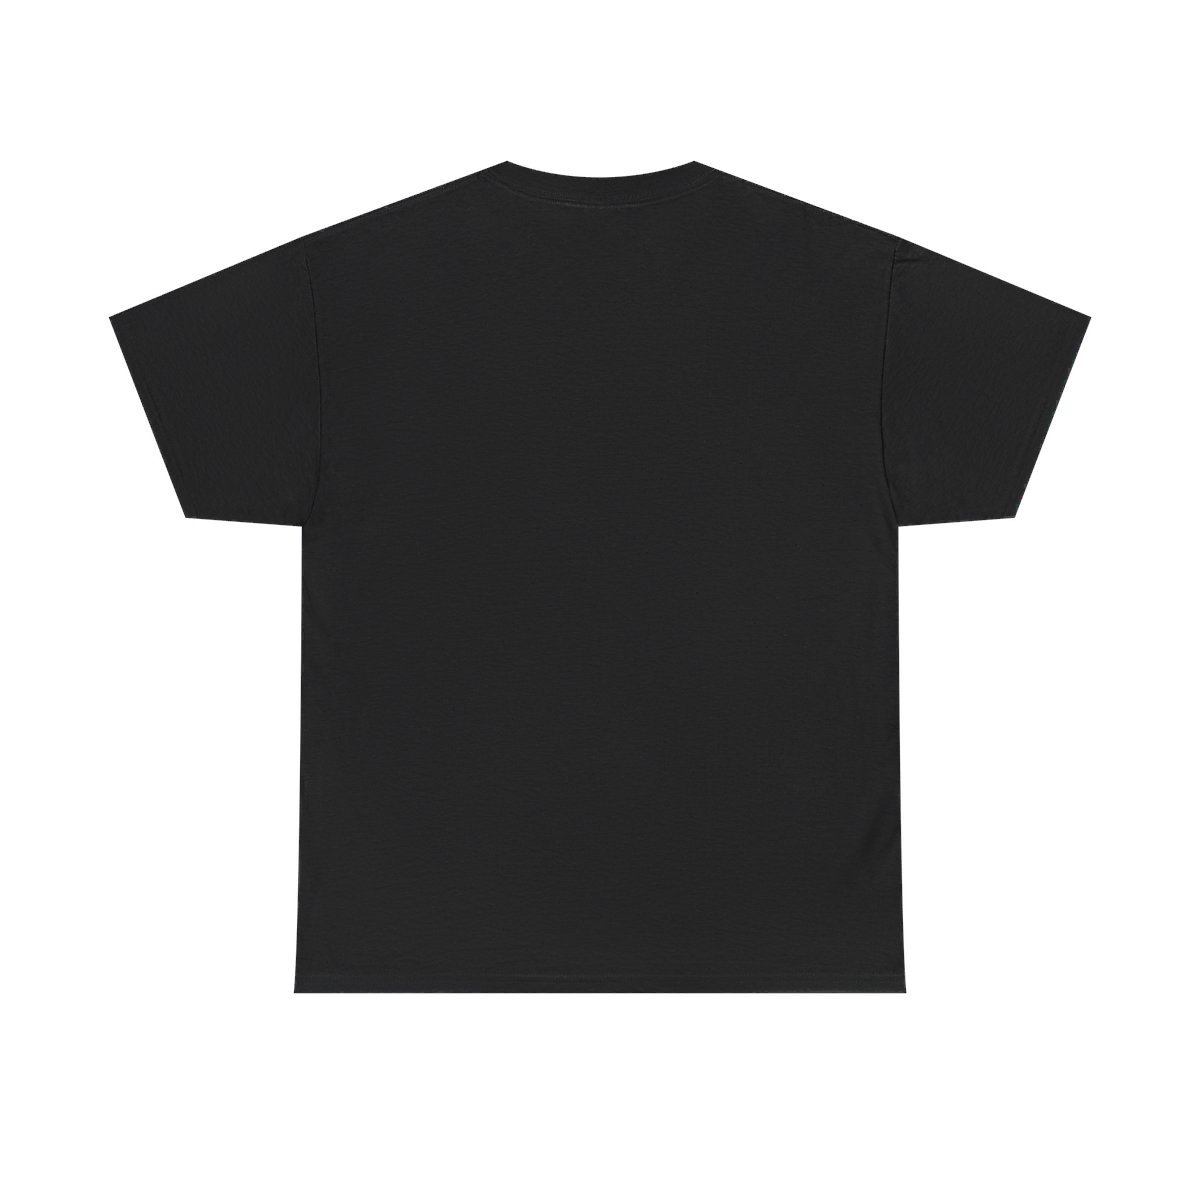 Peter118 – Need You More Logo Short Sleeve Tshirt